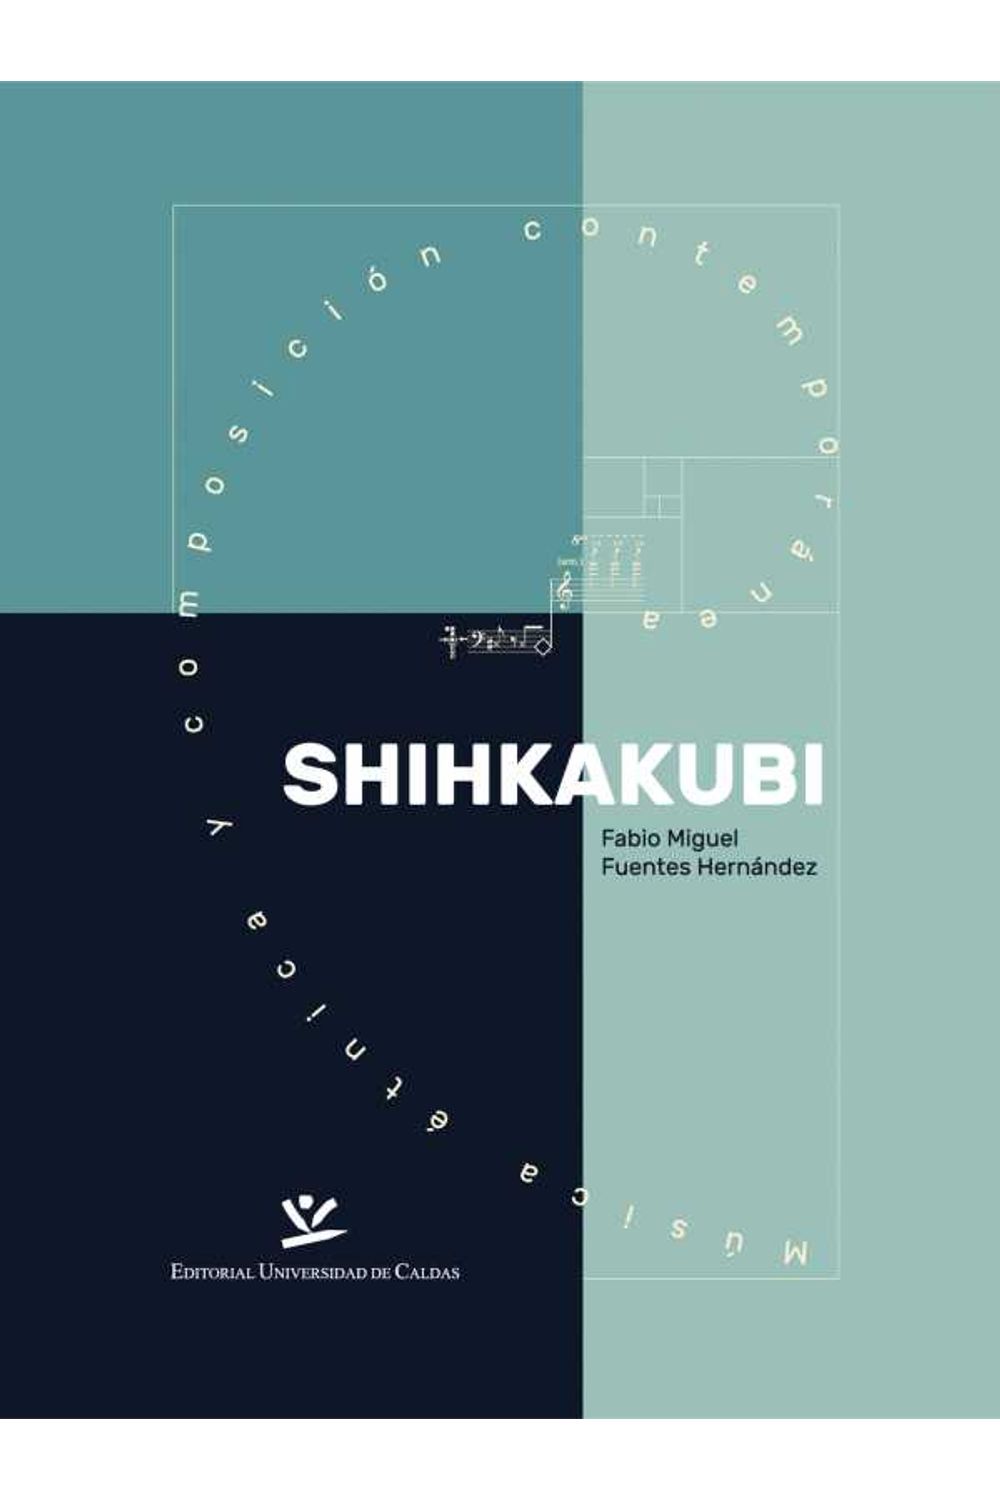 bw-shihkakubi-editorial-universidad-de-caldas-9789587592184